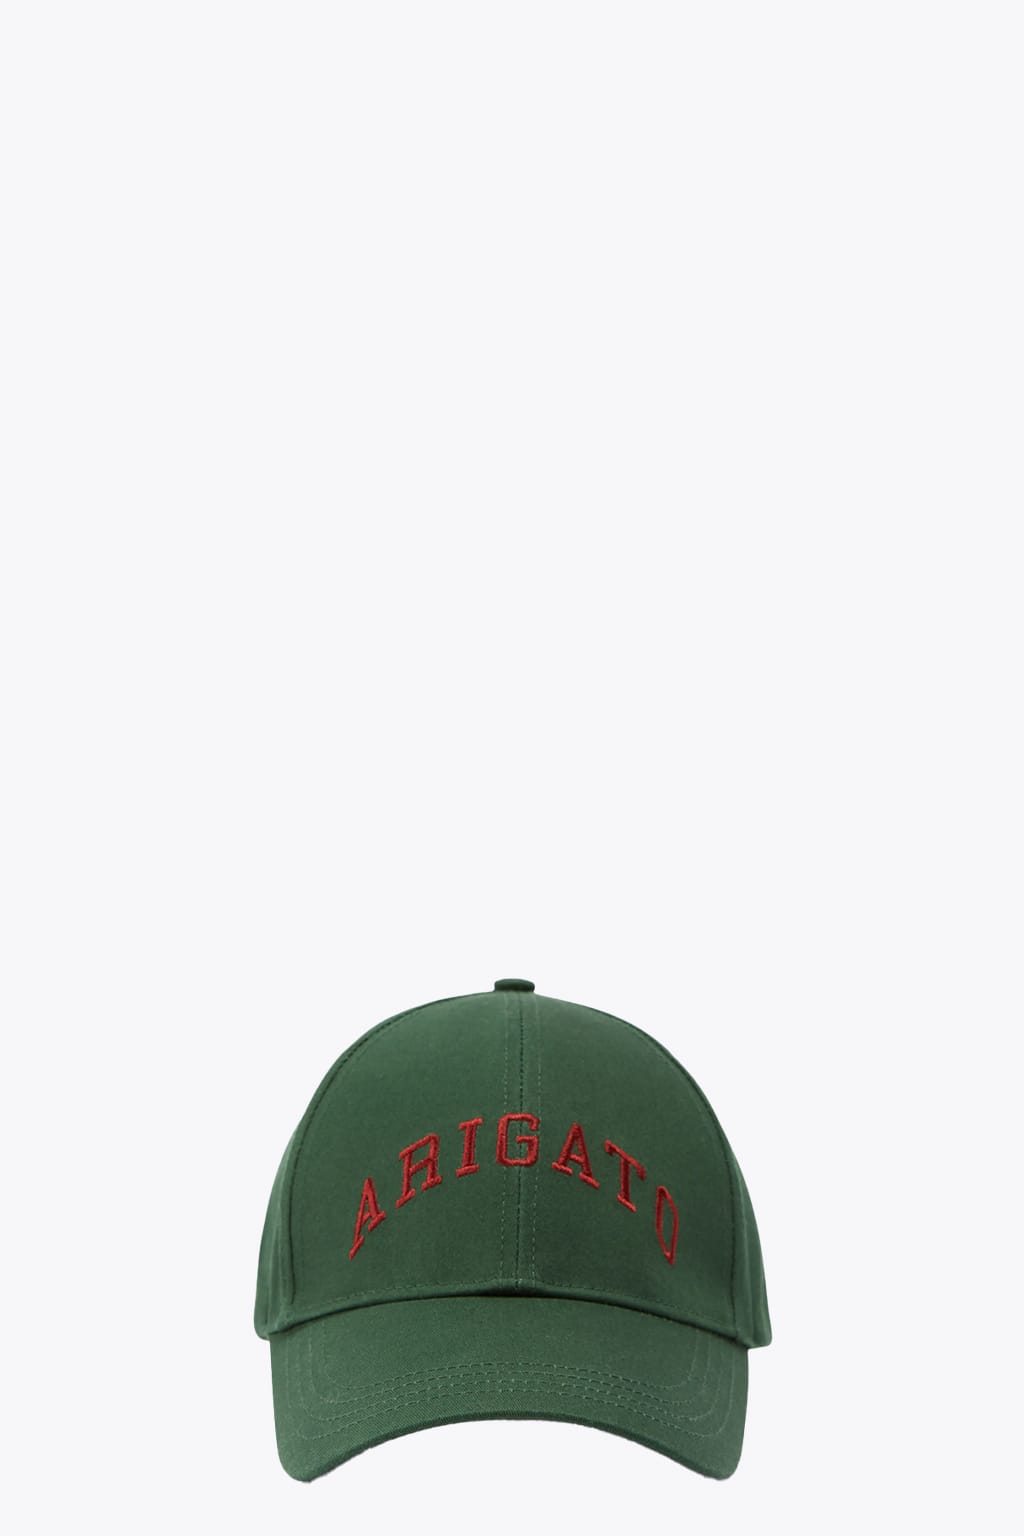 AXEL ARIGATO COLLEGE ARIGATO CAP GREEN CAP WITH RED LOGO EMBROIDERY - COLLEGE ARIGATO CAP